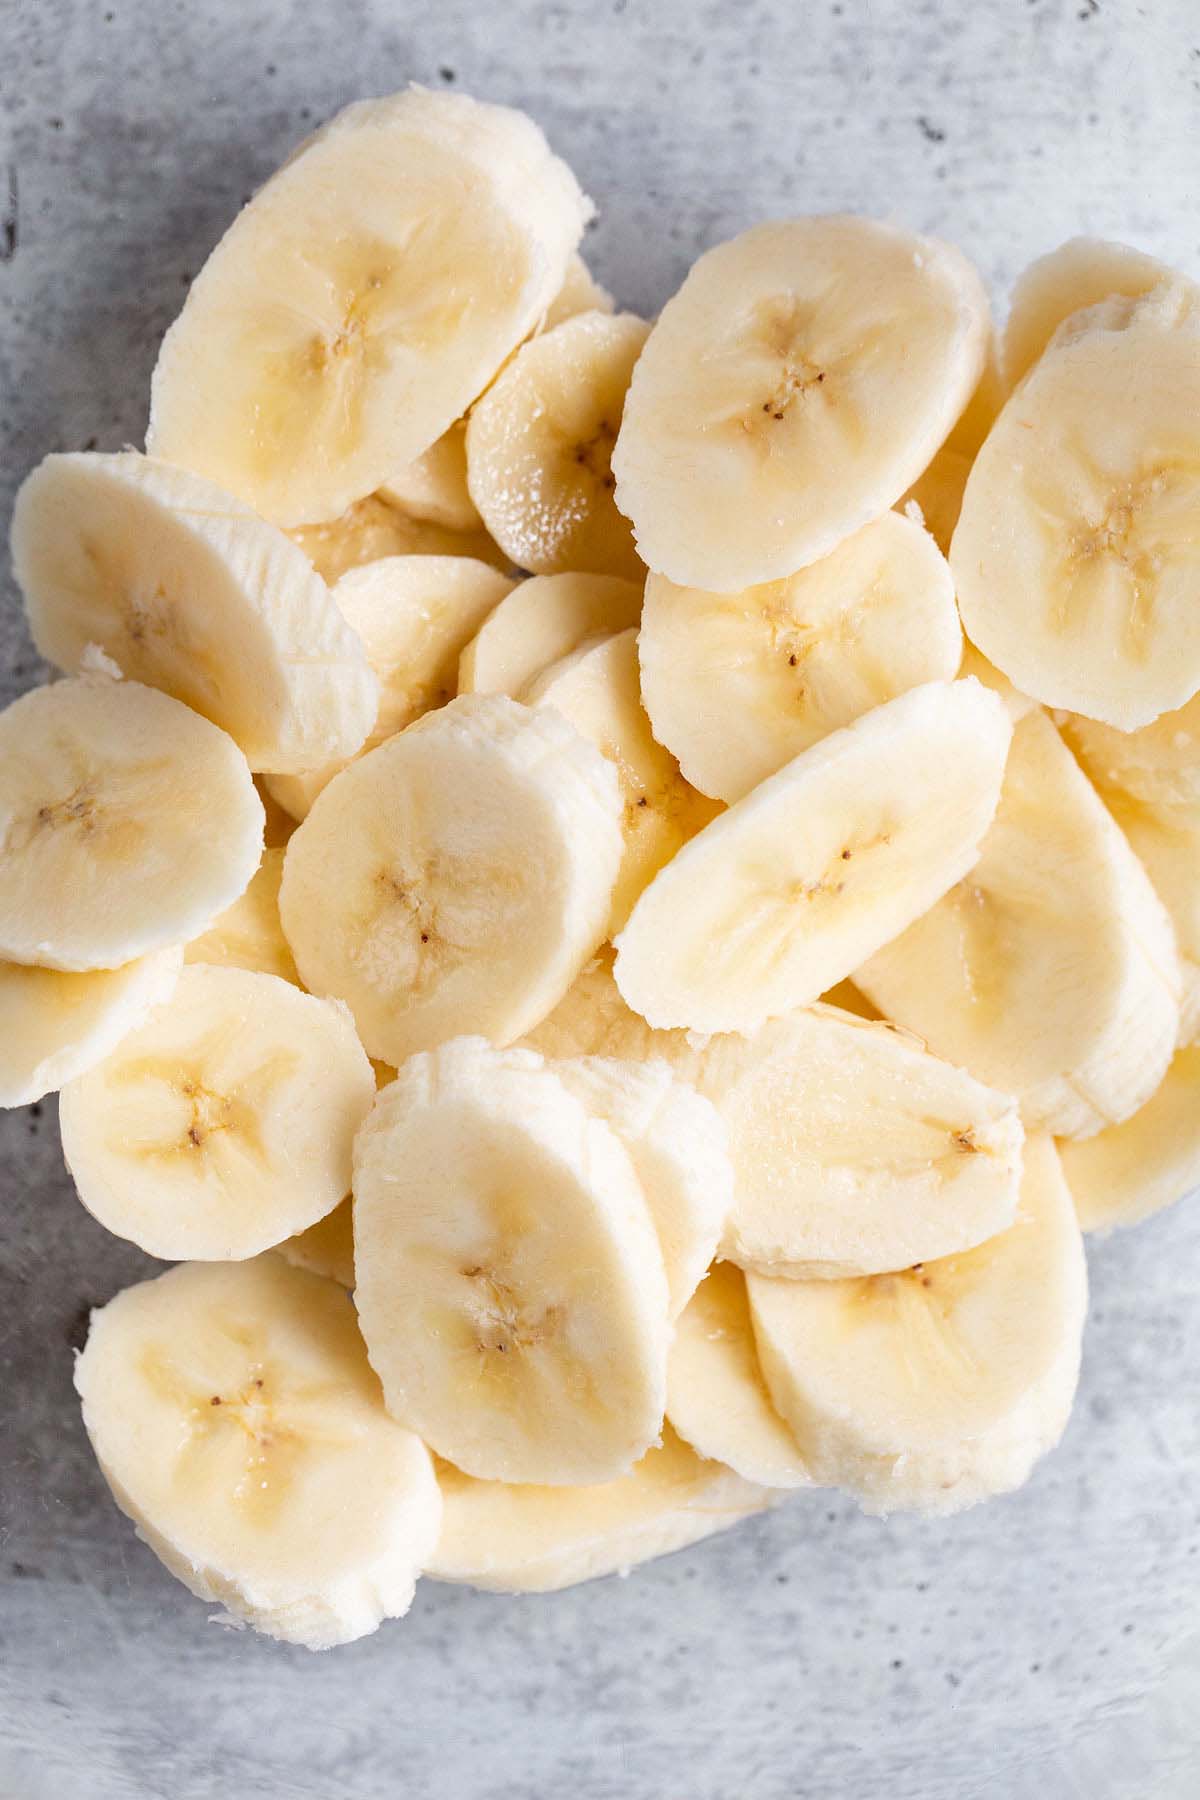 Sliced bananas